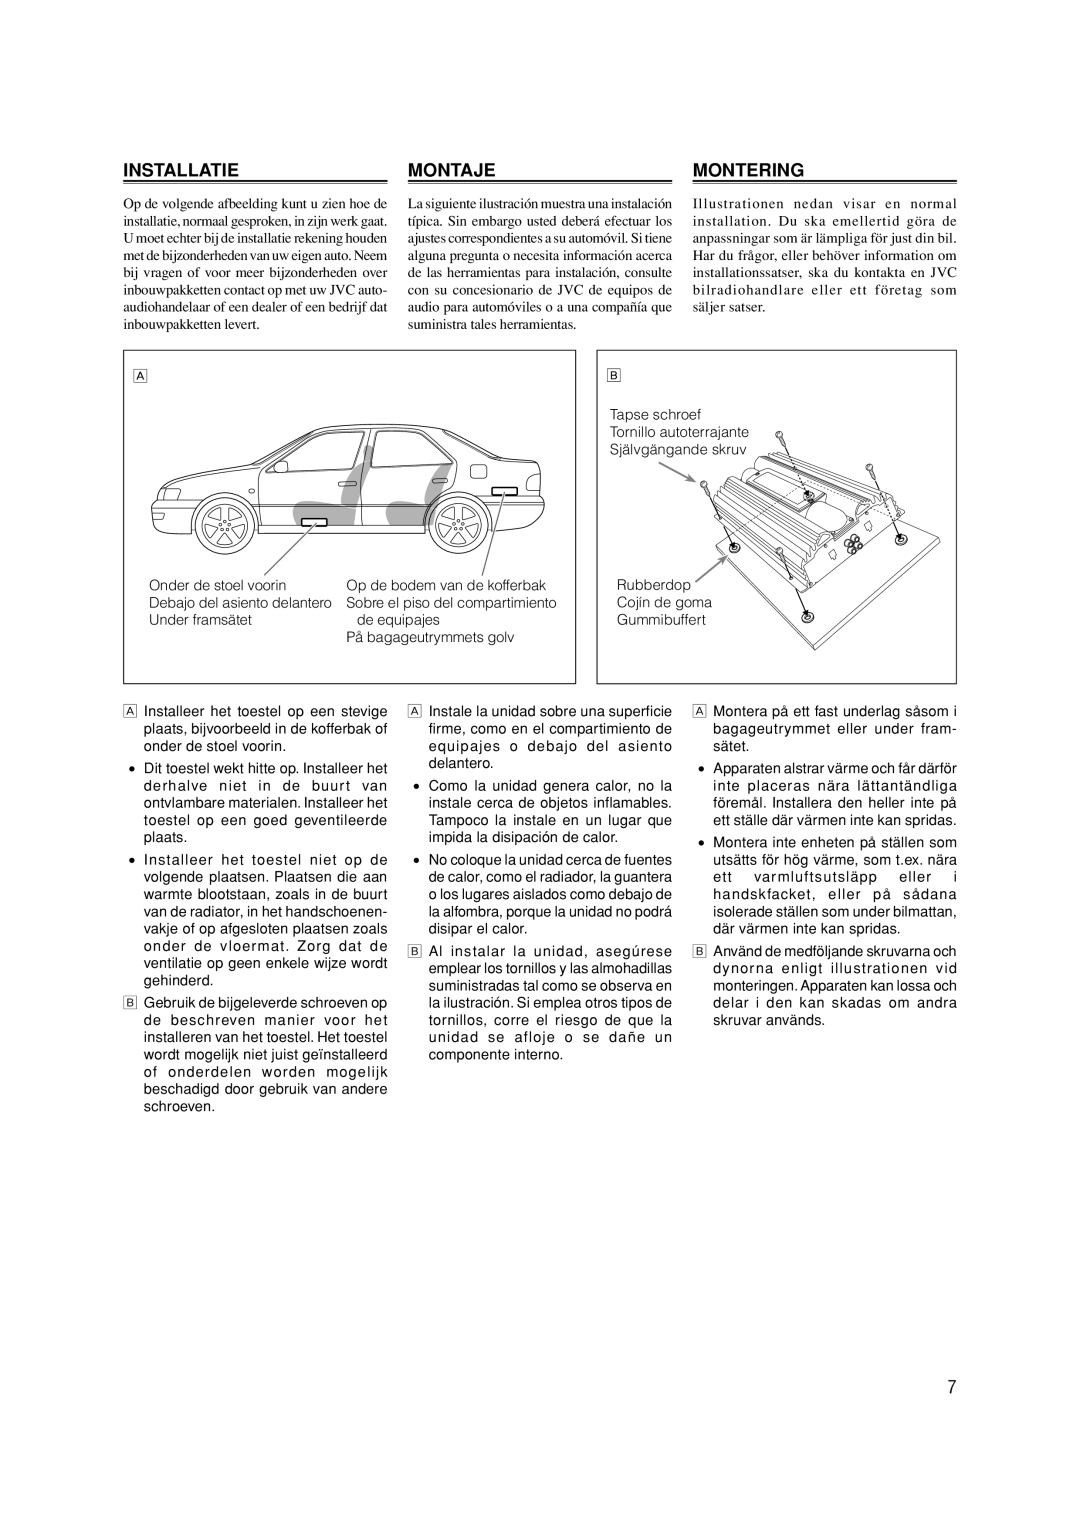 JVC KS-AX4550 manual Installatie, Montaje, Montering 